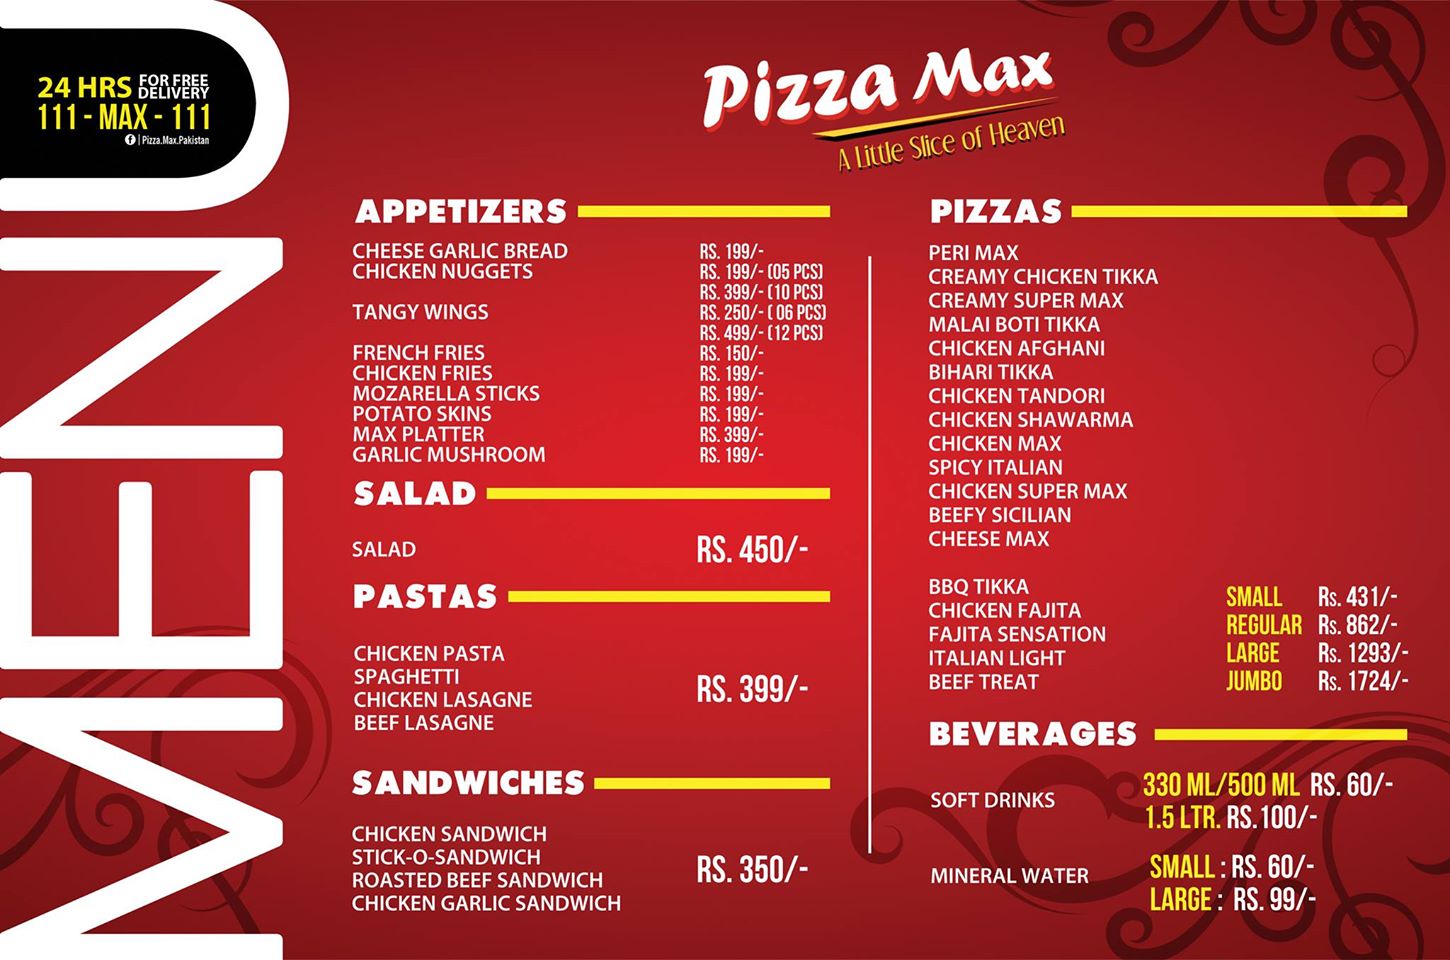 Pizza Max, Airport Restaurant in Karachi - Menu, Timings, Contacts, Map1450 x 960